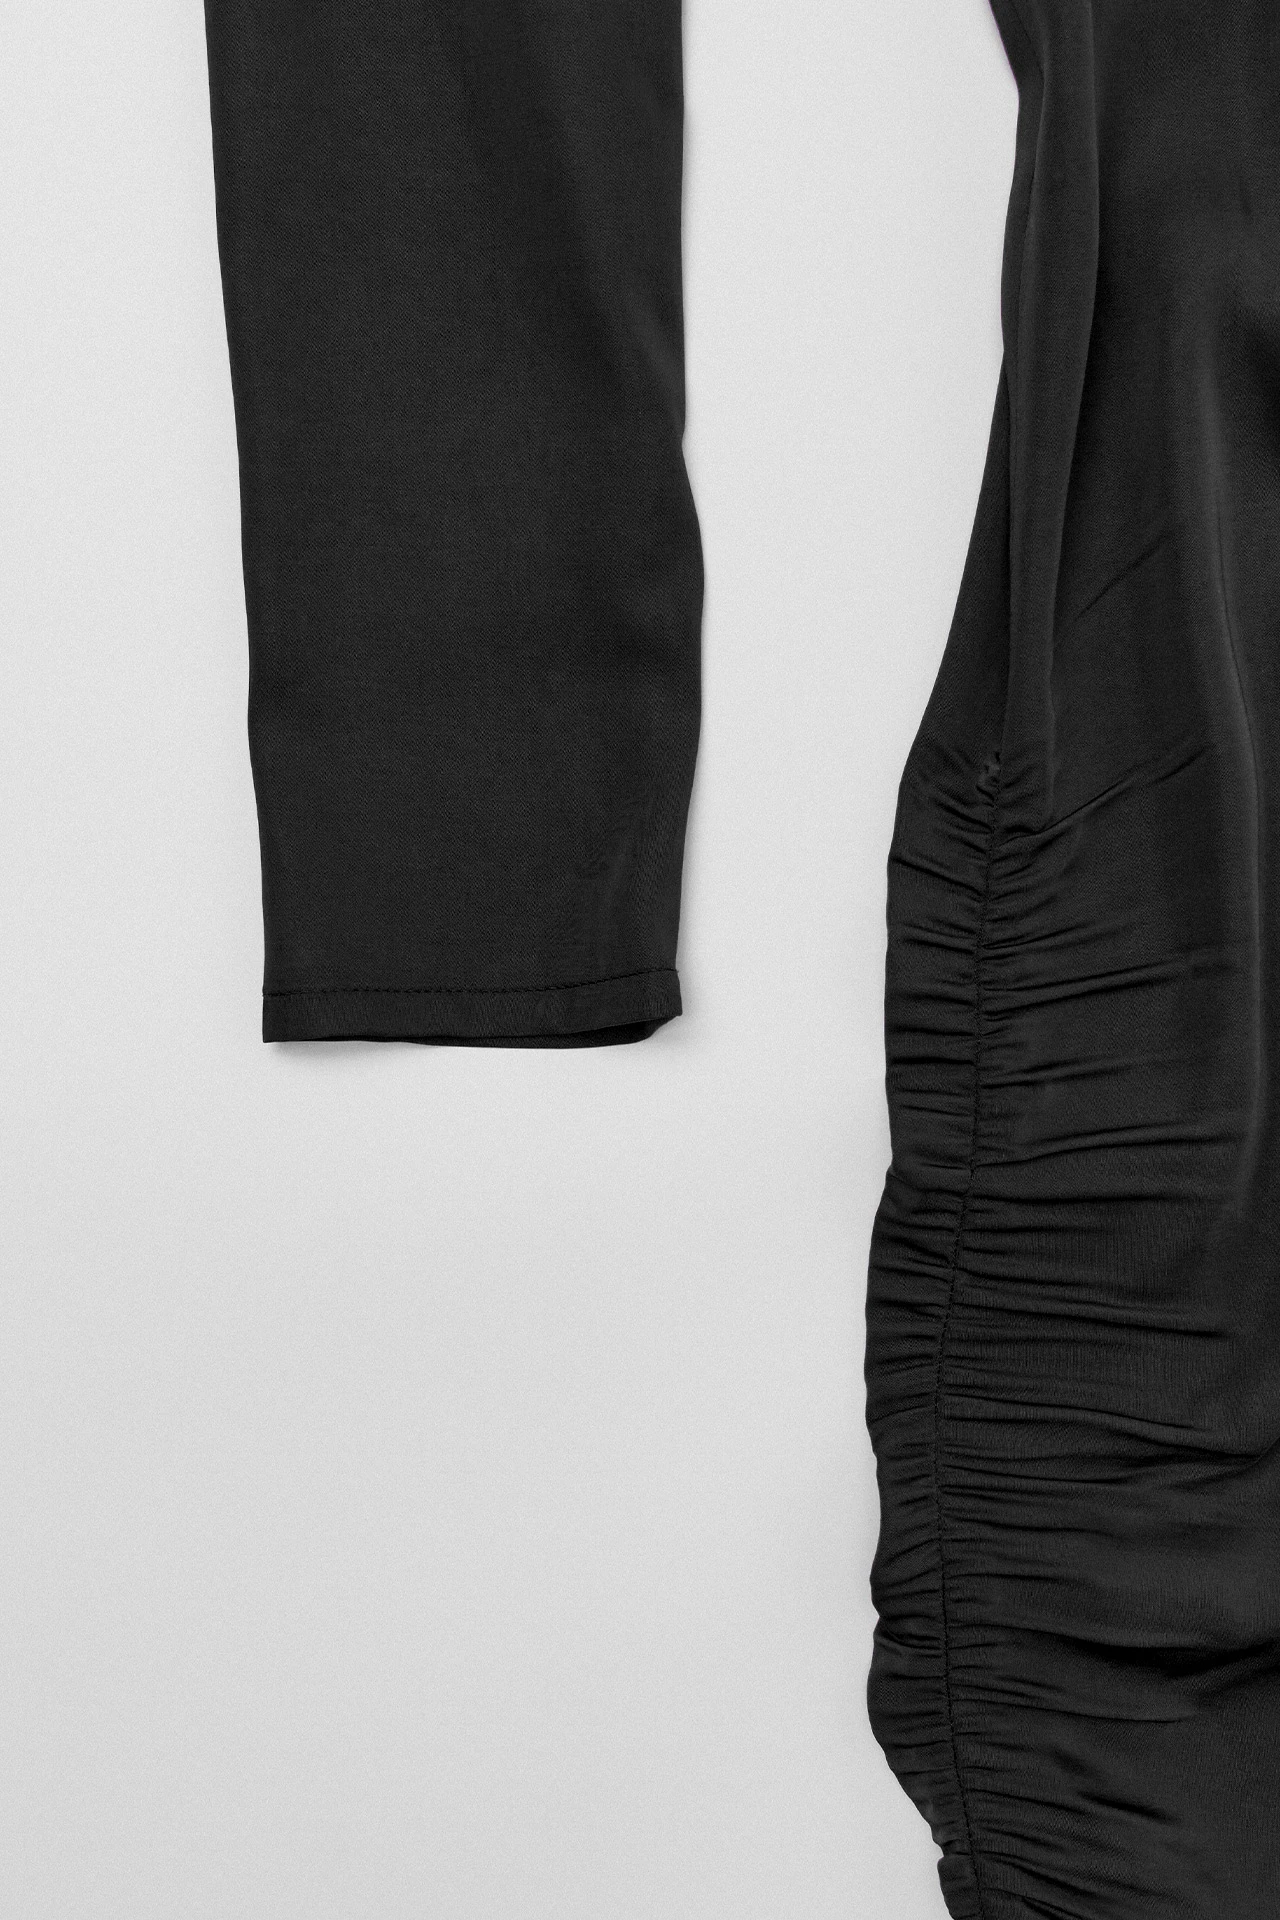 Miista-bruna-black-dress-02